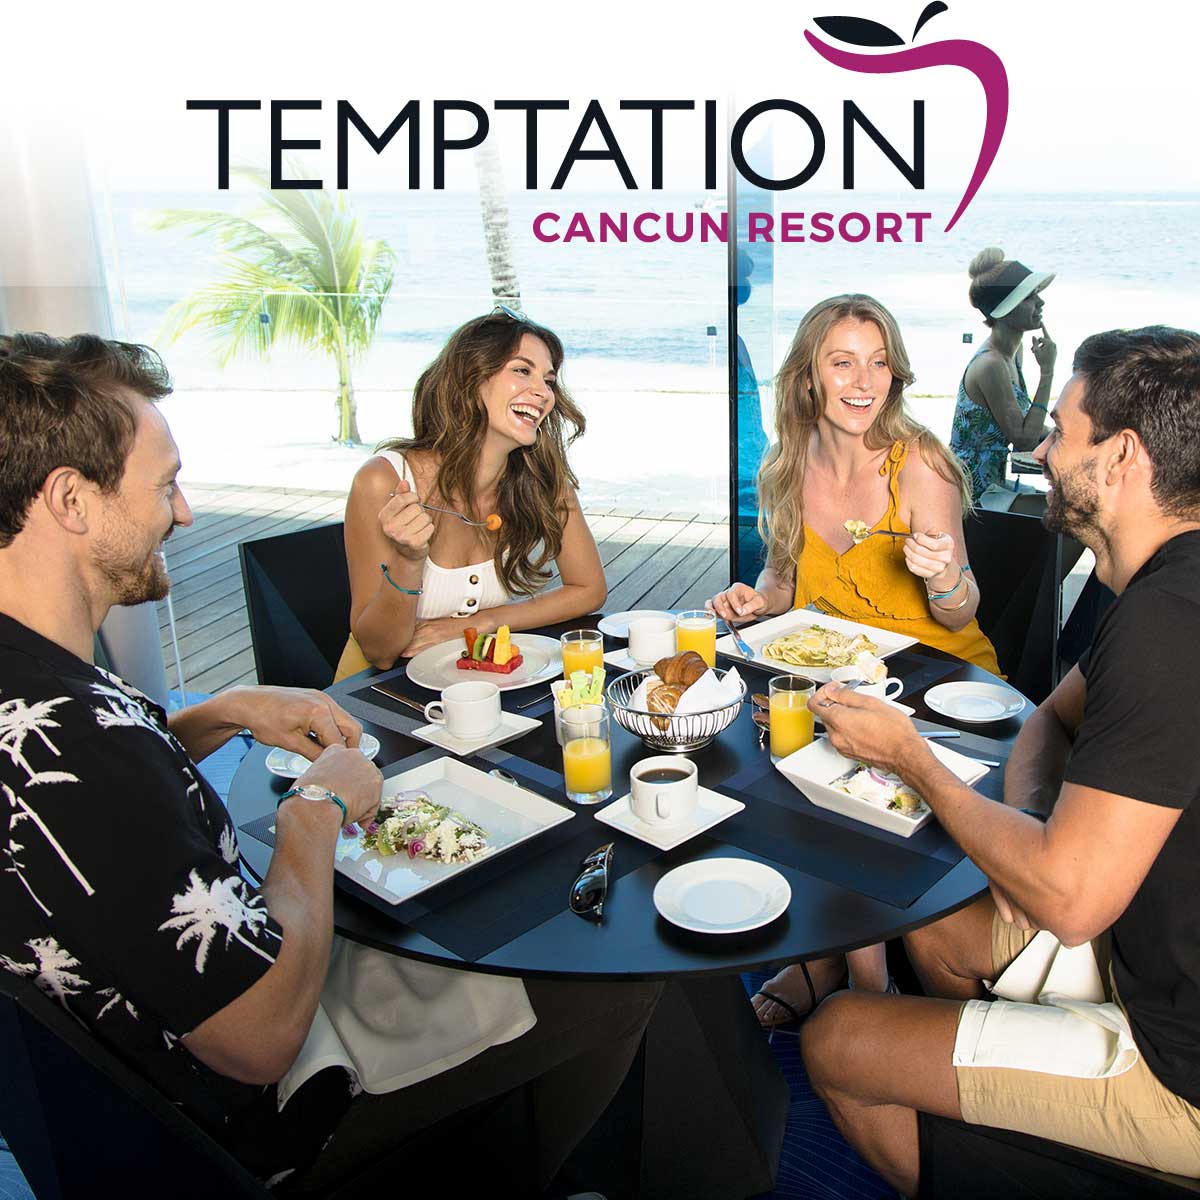 All Inclusive feature of Temptation Cancun photo photo